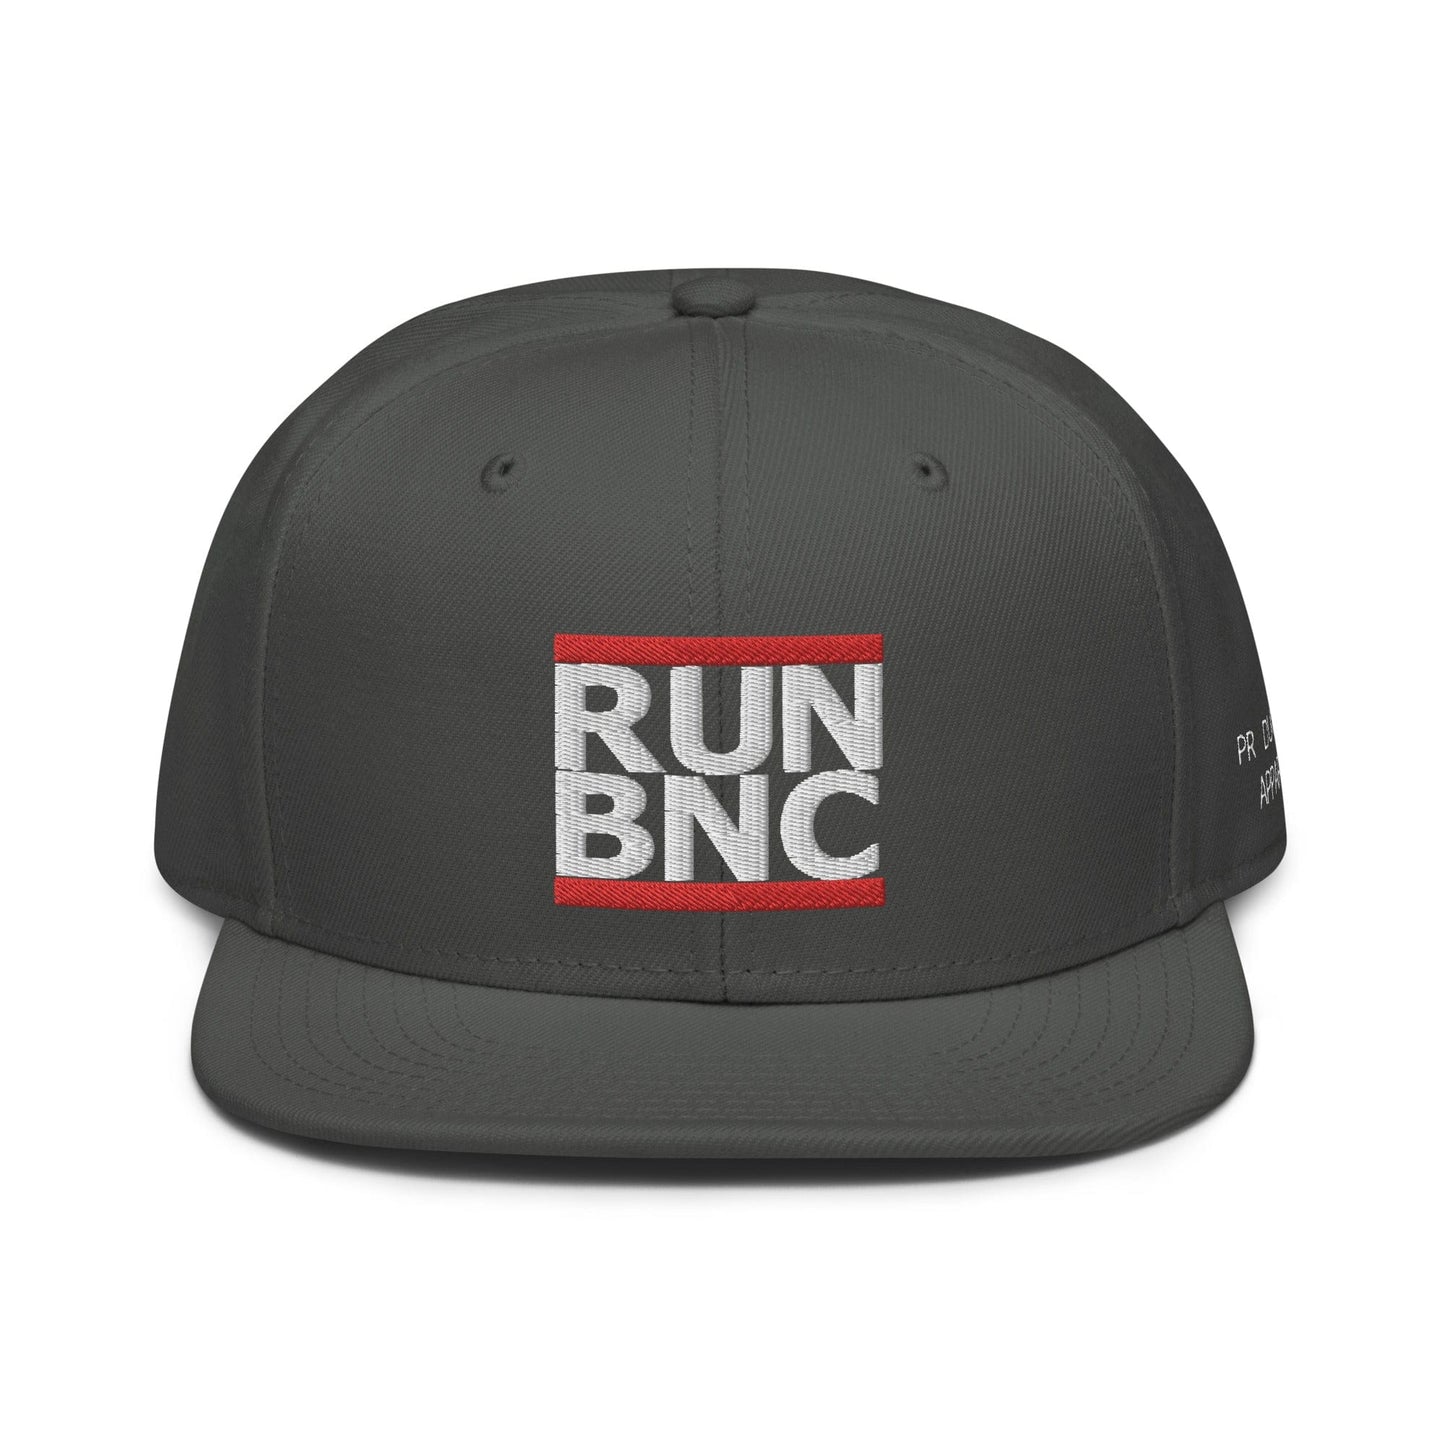 Production Apparel RUN BNC Hat Charcoal gray